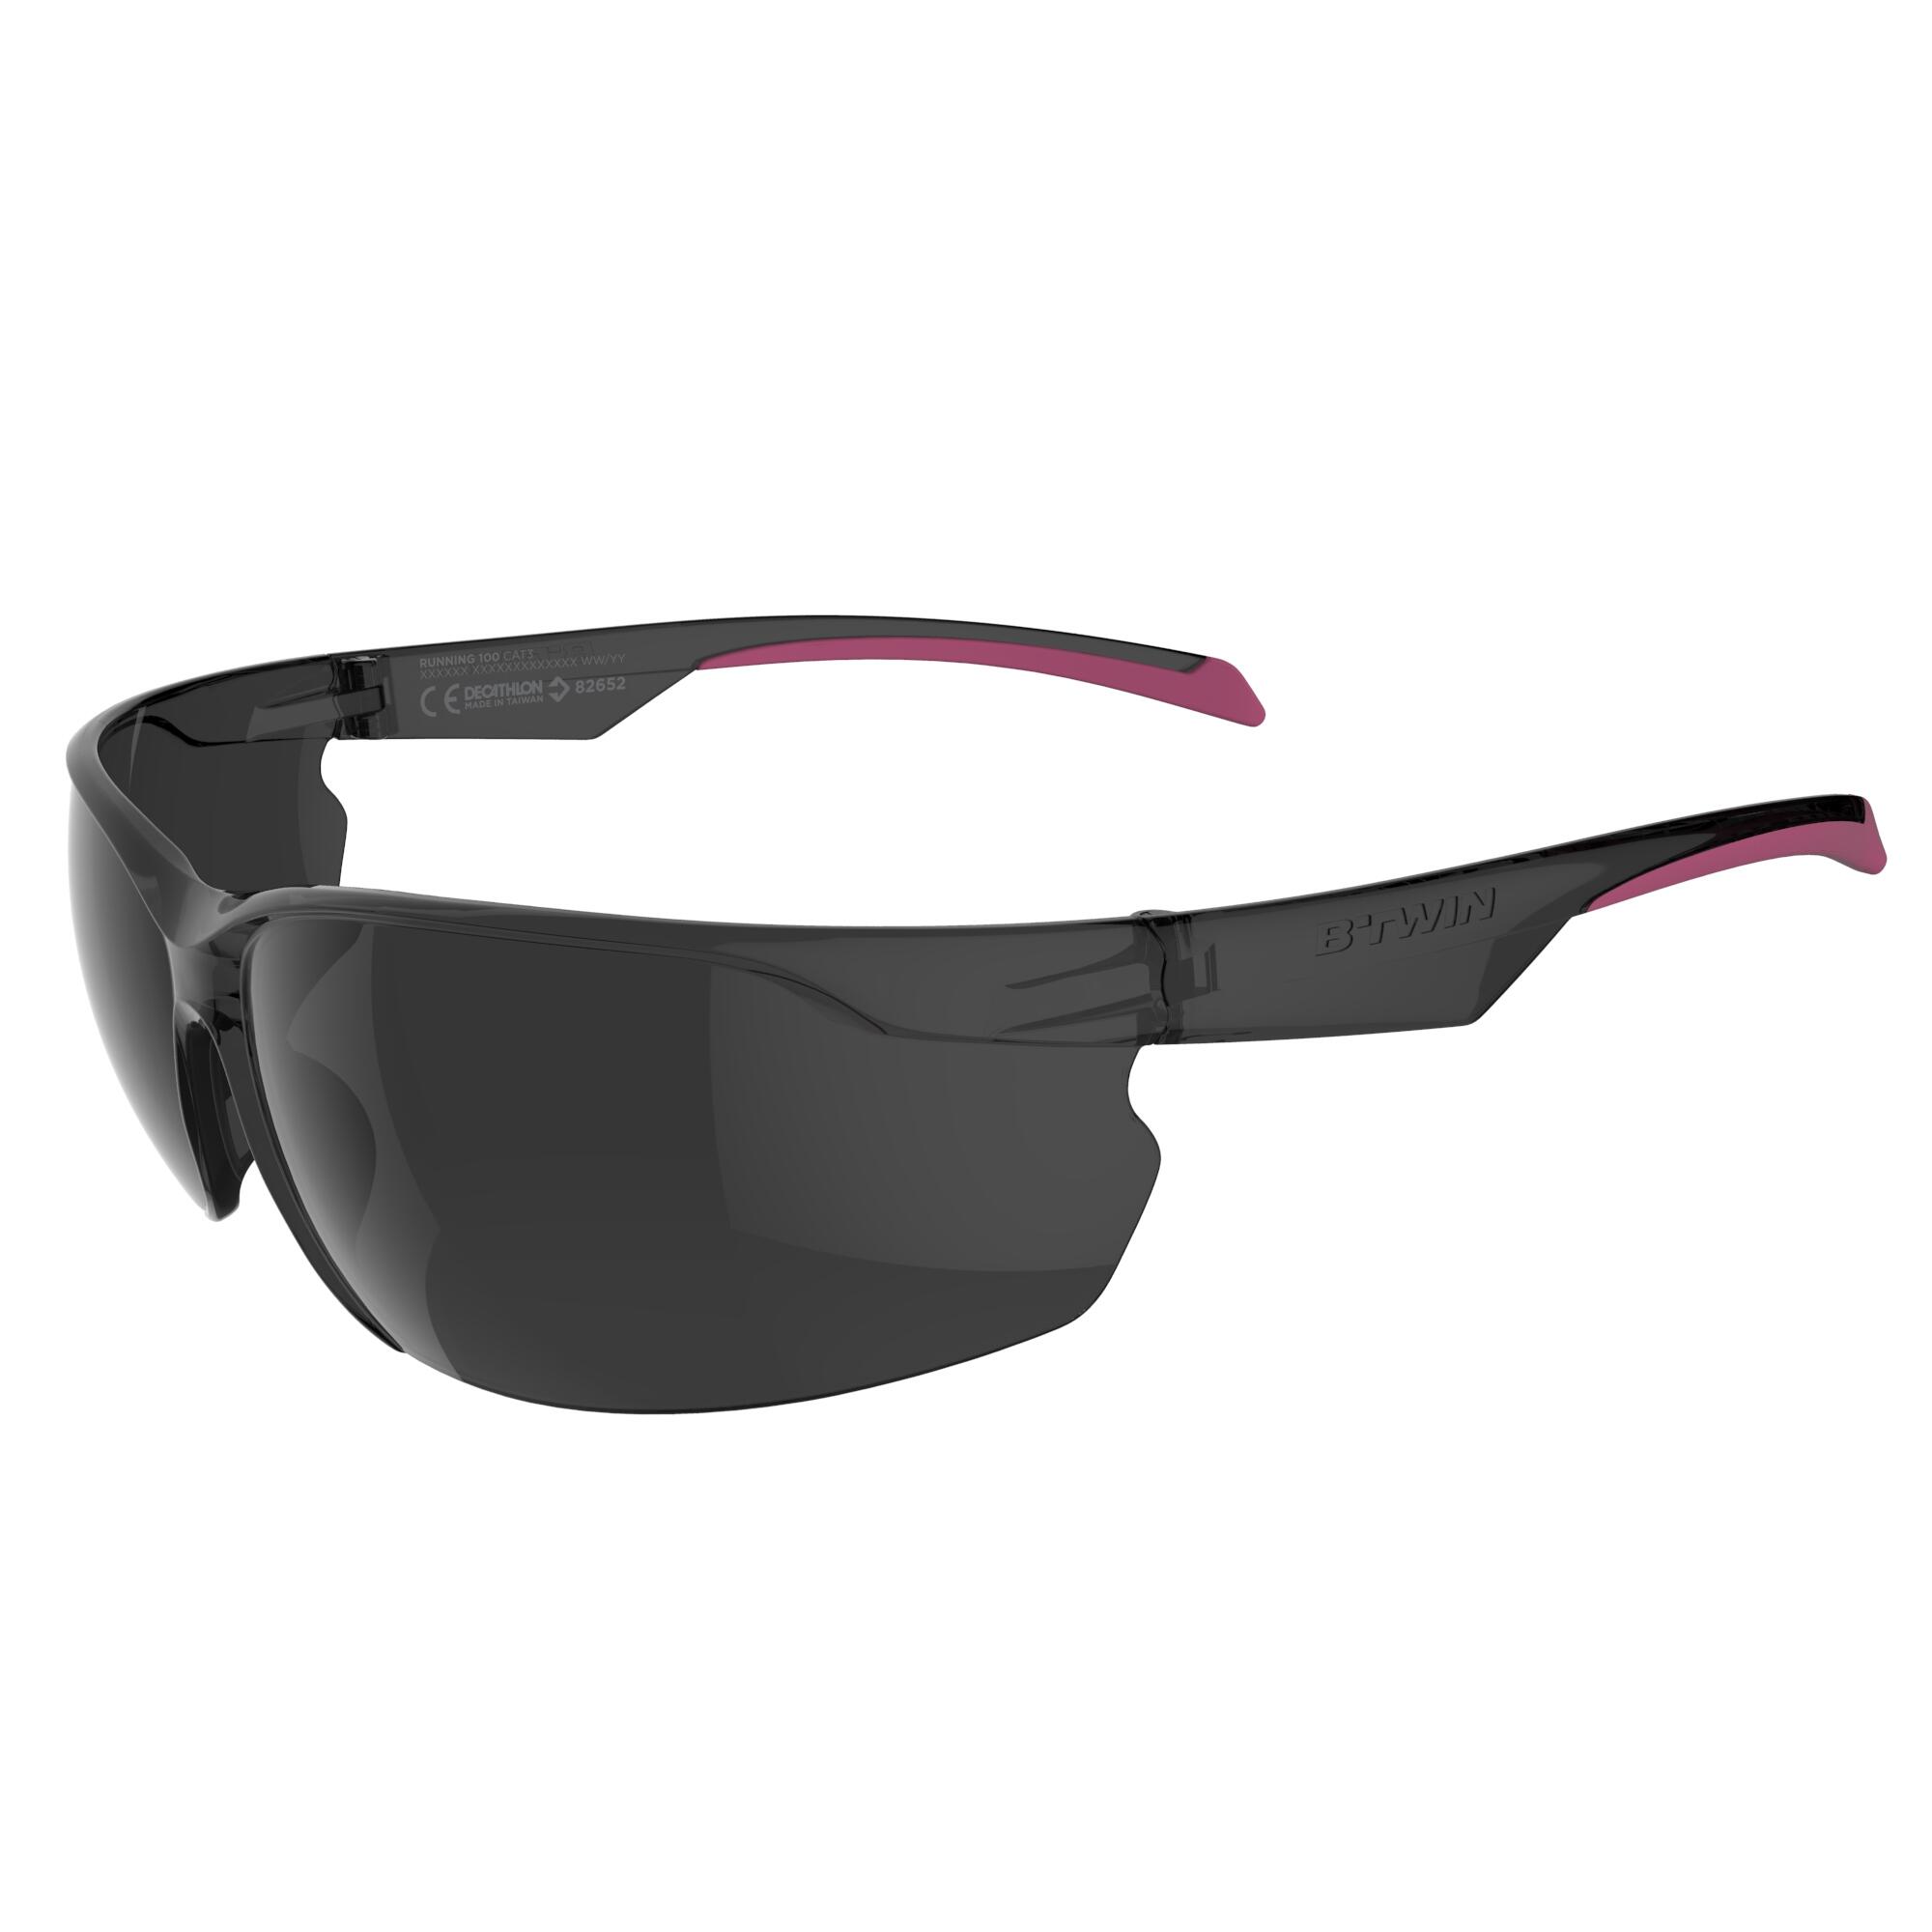 ROCKRIDER ST 100 Category 3 Adult Mountain Biking Sunglasses - Grey/Pink